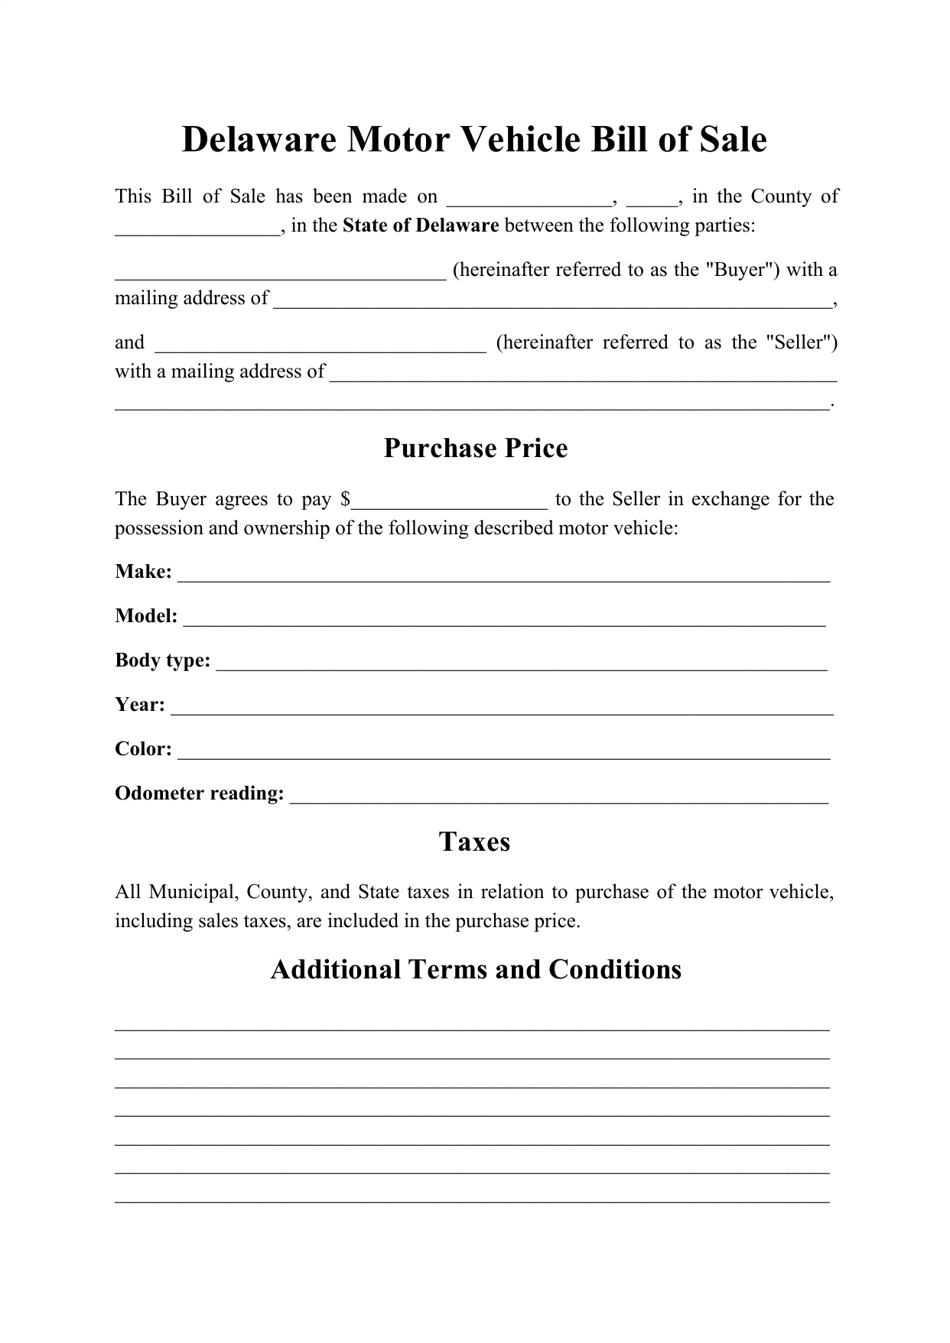 delaware motor vehicle bill of sale form download printable pdf templateroller